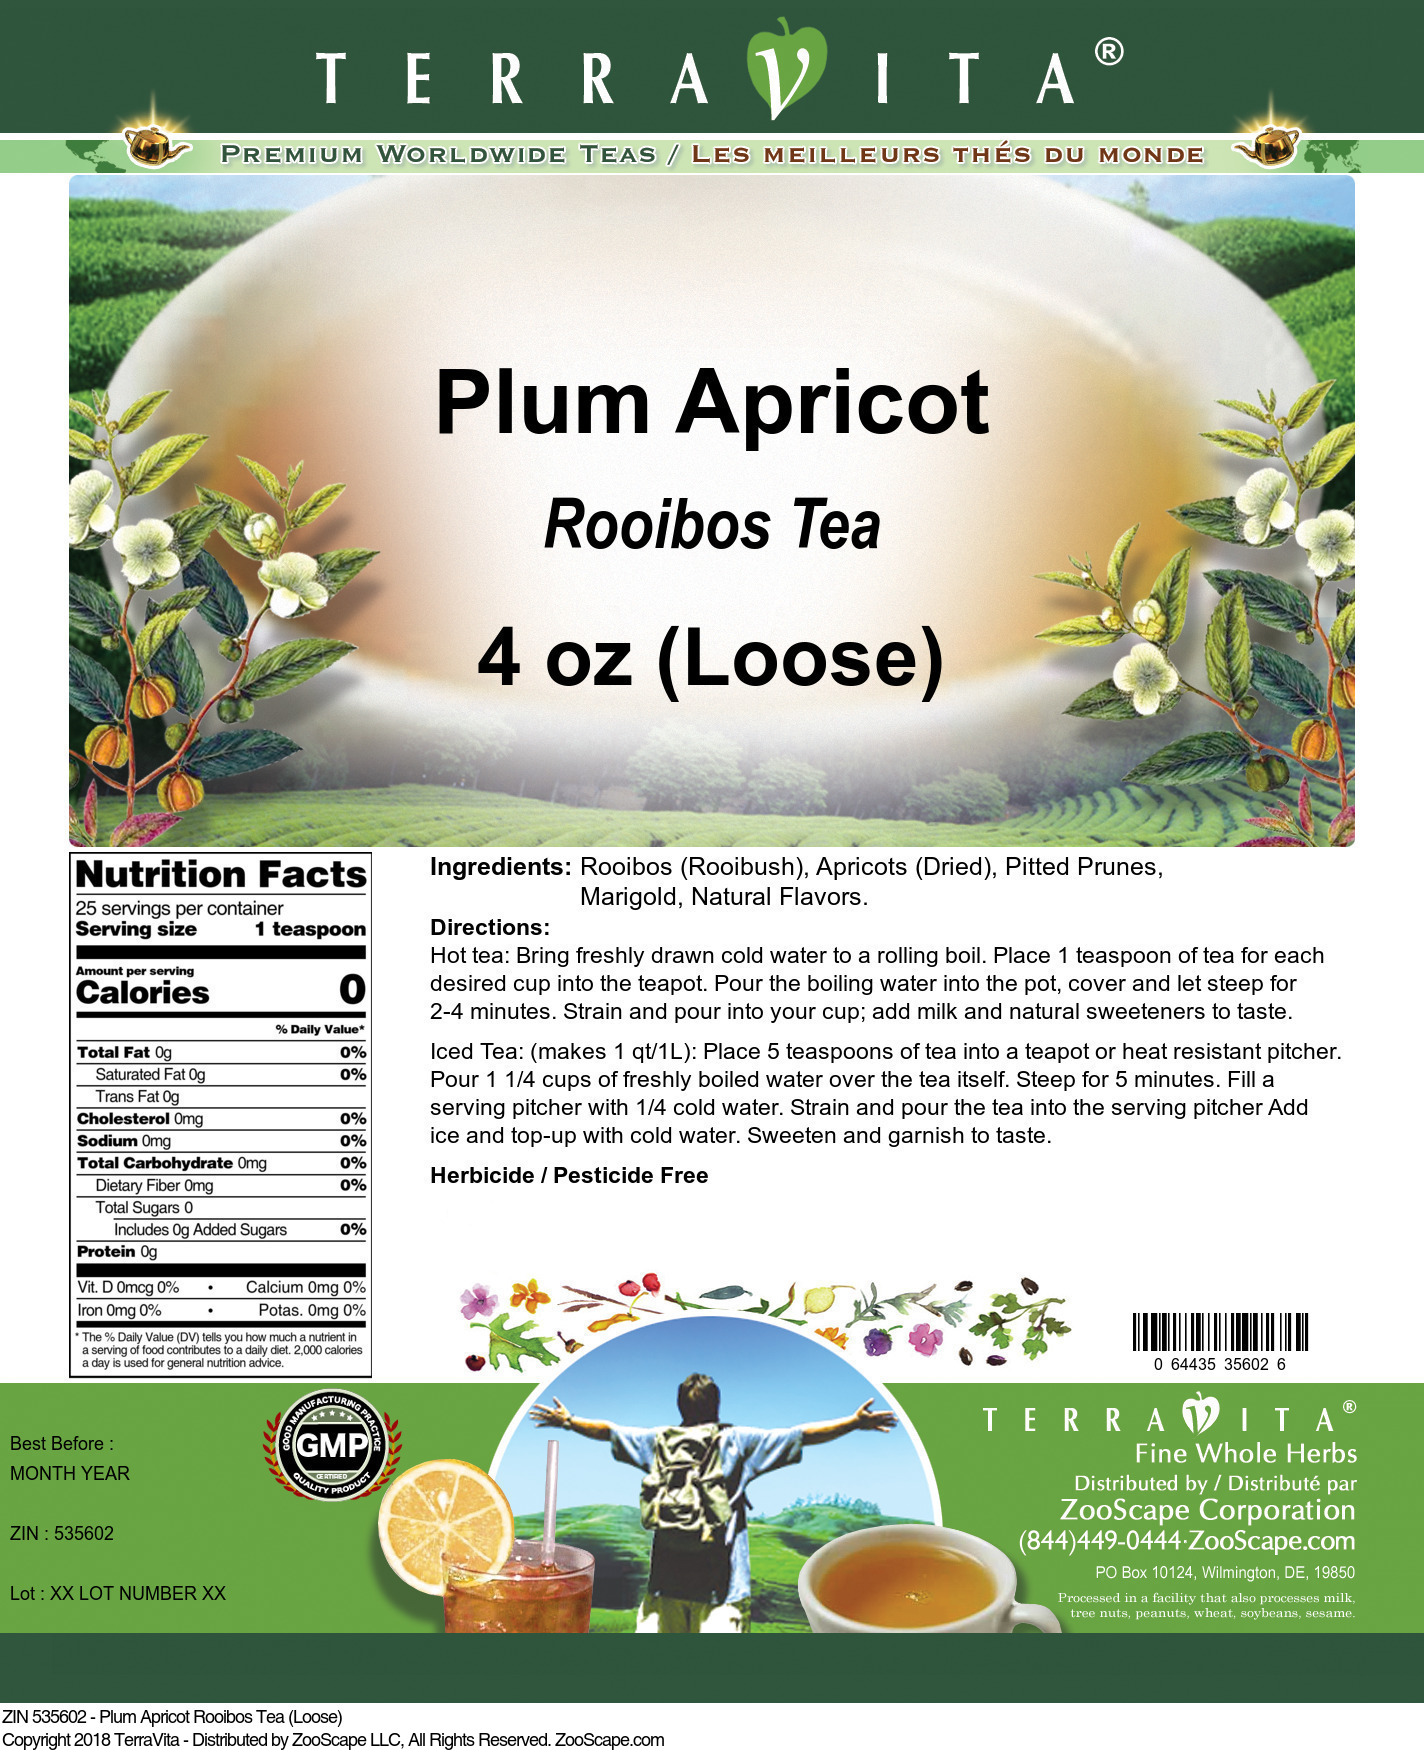 Plum Apricot Rooibos Tea (Loose) - Label